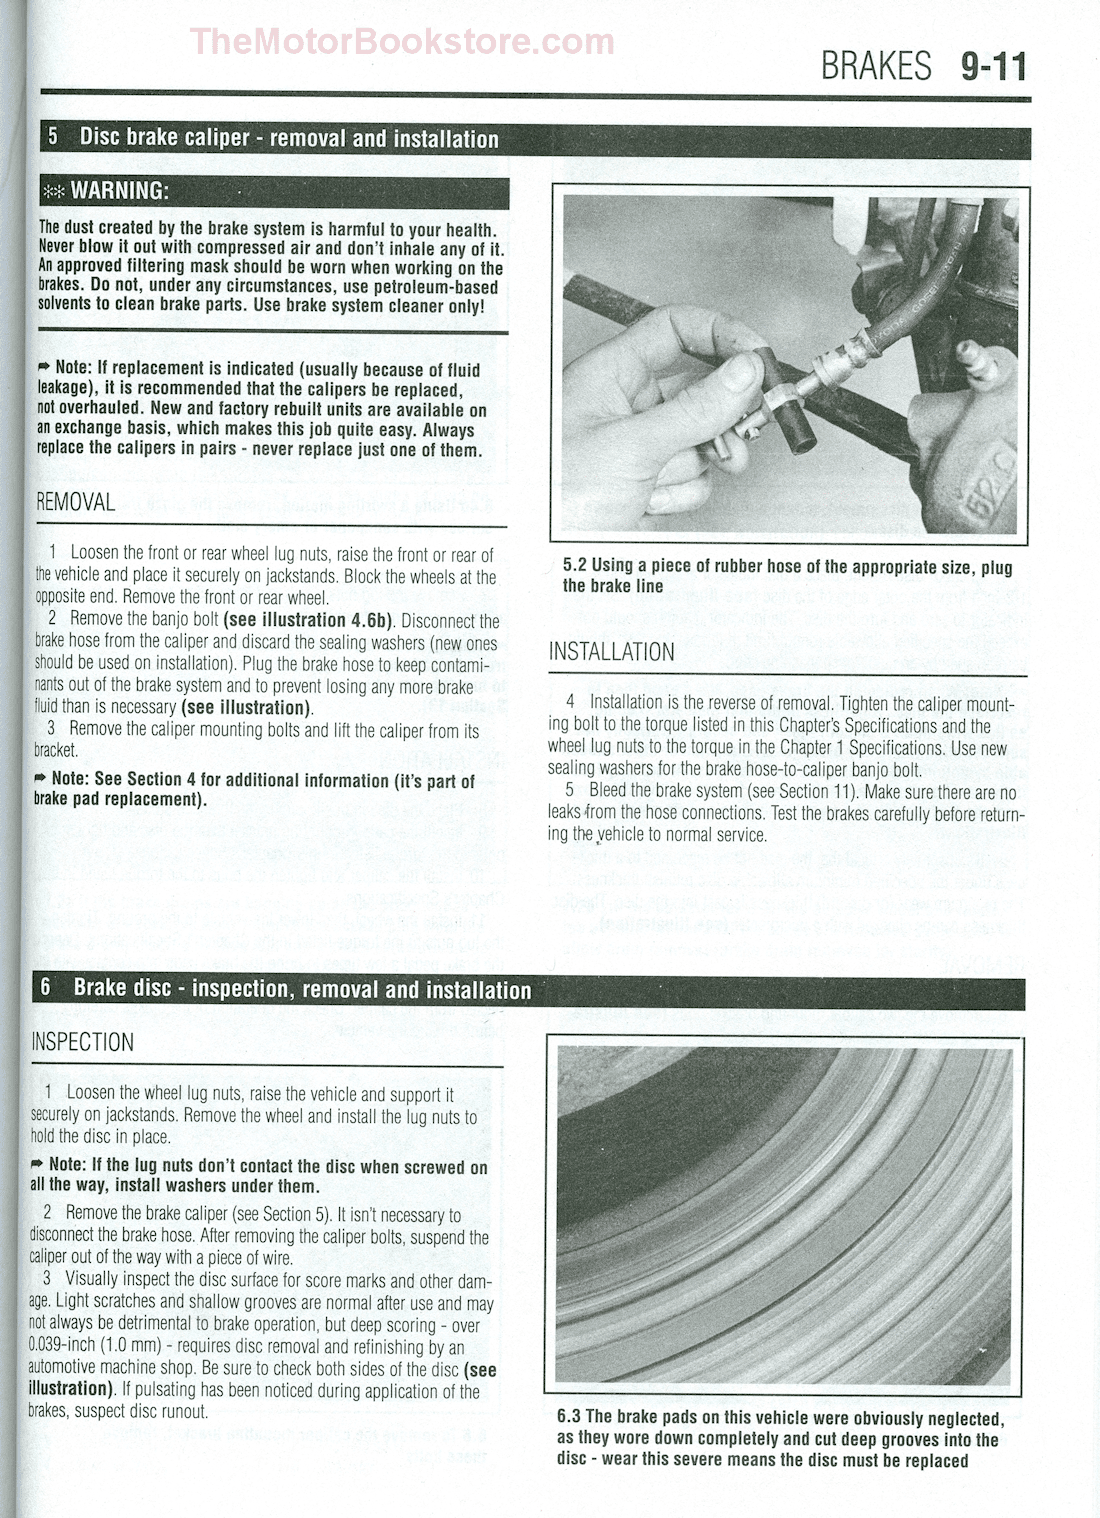 Chilton 52702 Nissan Sentra Repair Manual: 2007-2012 - Sample Page ...